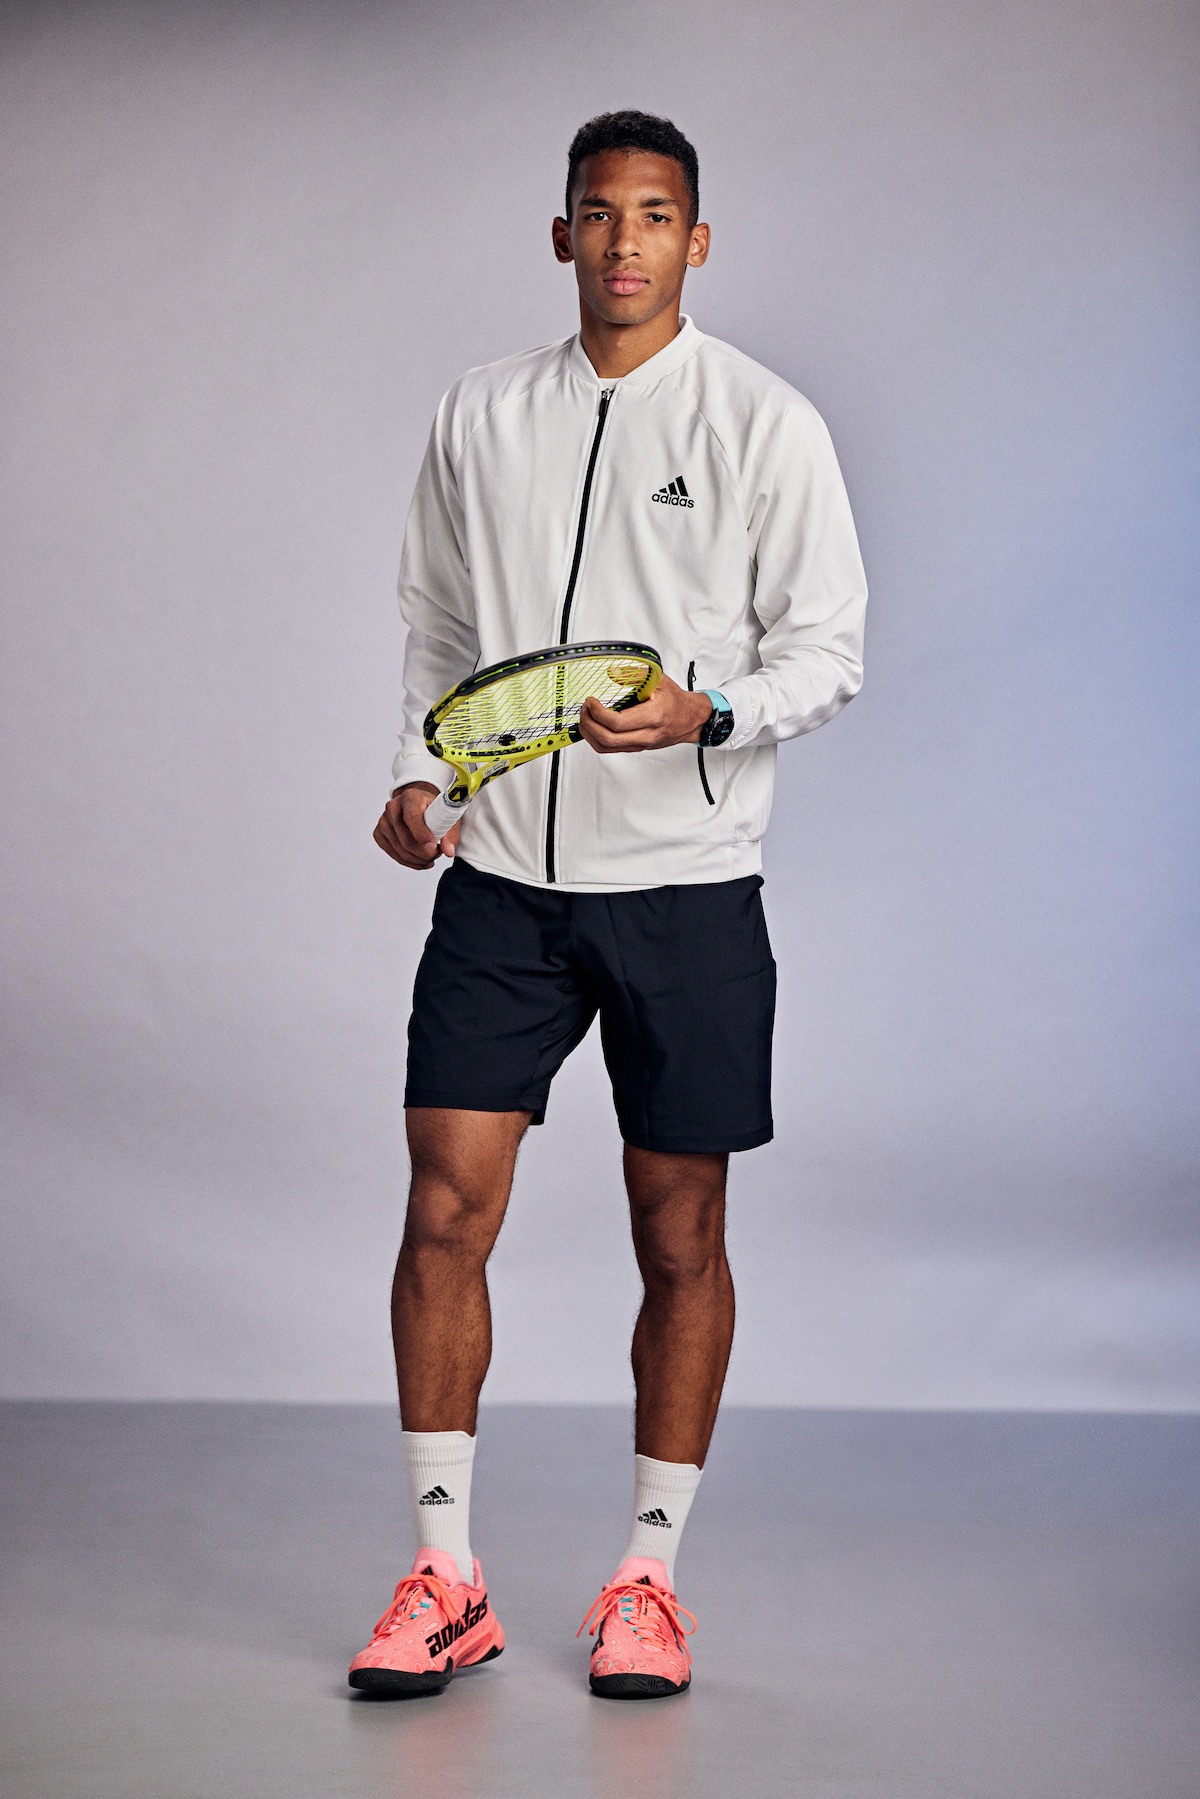 Netflix ups live sports coverage, with Rafael Nadal and Carlos Alcaraz  tennis match - Digital TV Europe